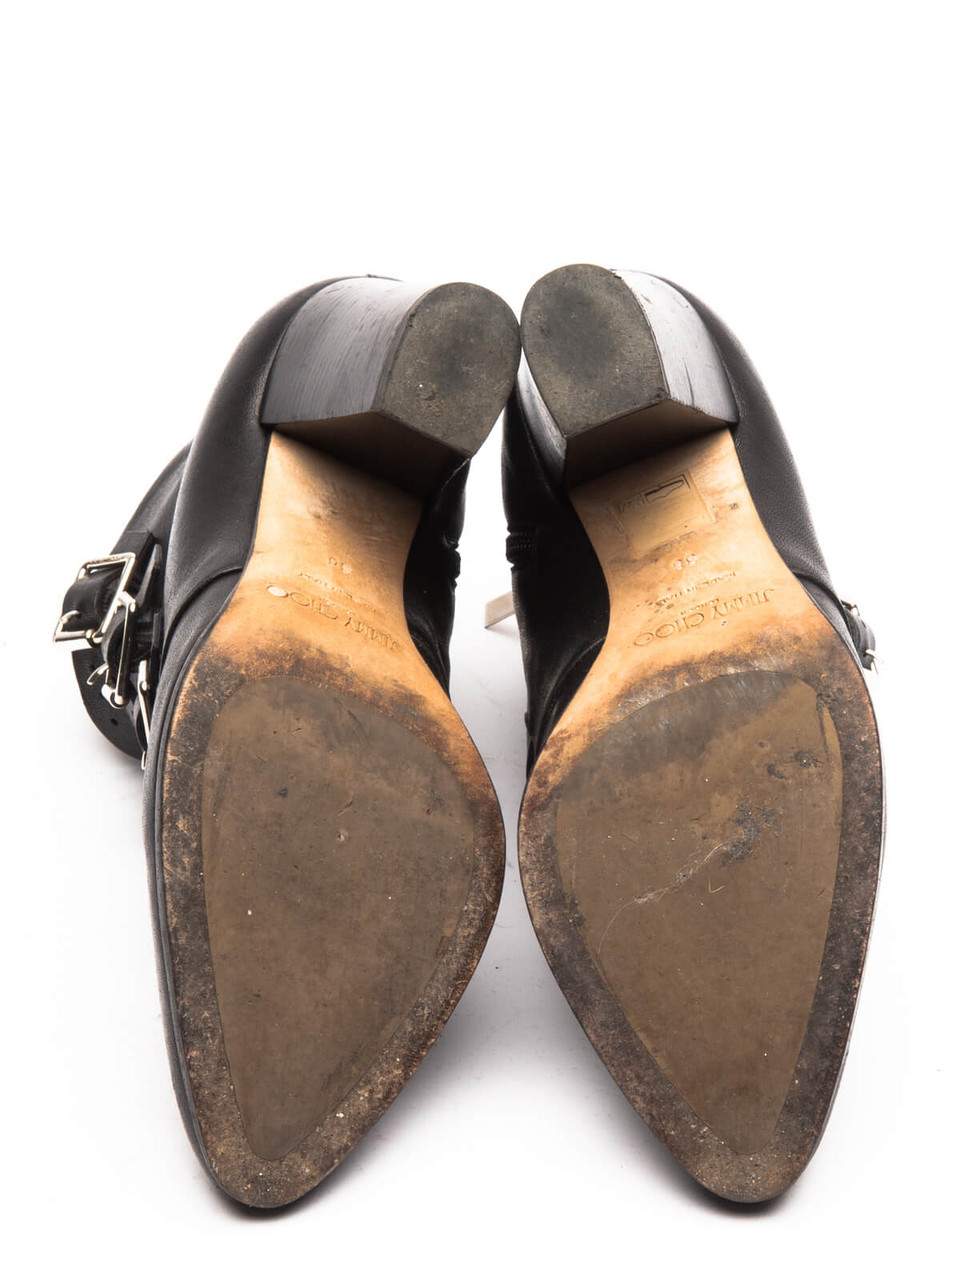 Jimmy Choo Women's Hutch Ankle Boots, Size 5 UK, Black Calfskin Leather